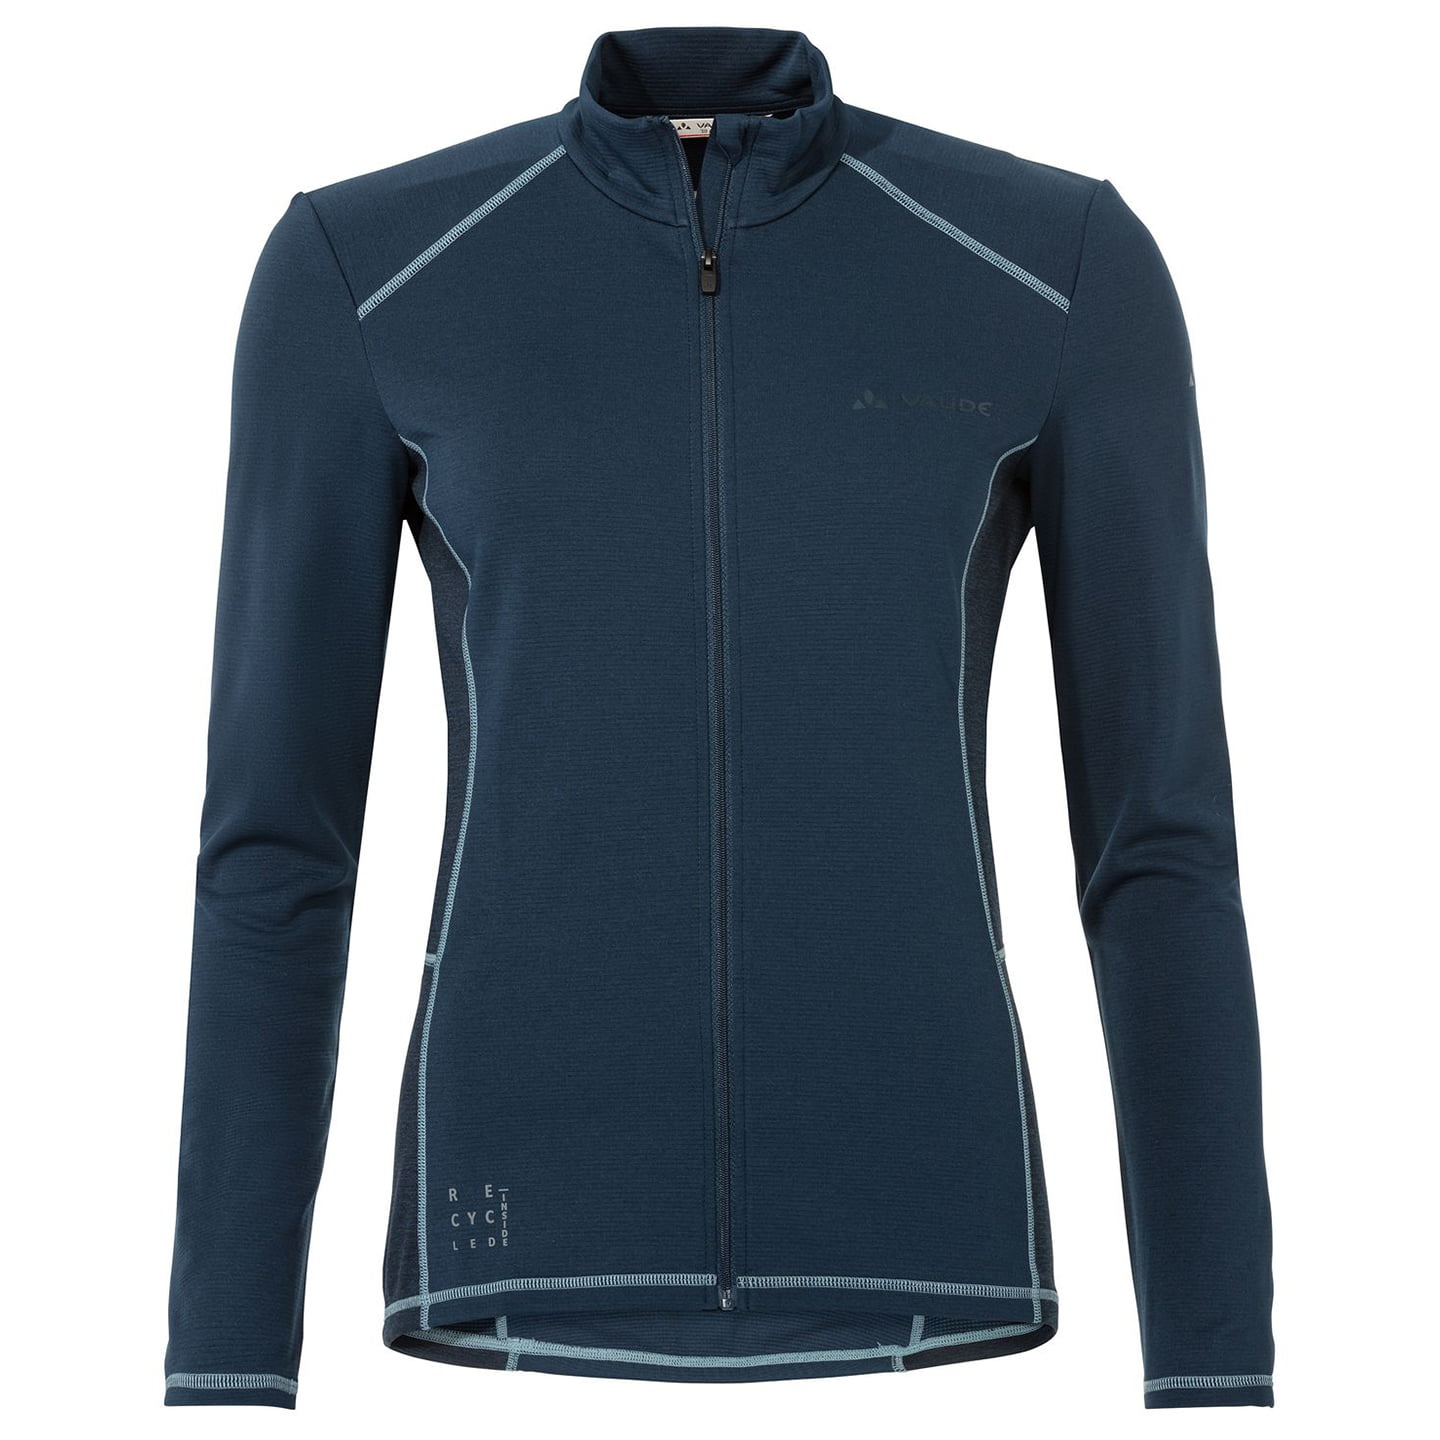 VAUDE Matera Women’s Long Sleeve Jersey, size 38, Cycling shirt, Cycling gear